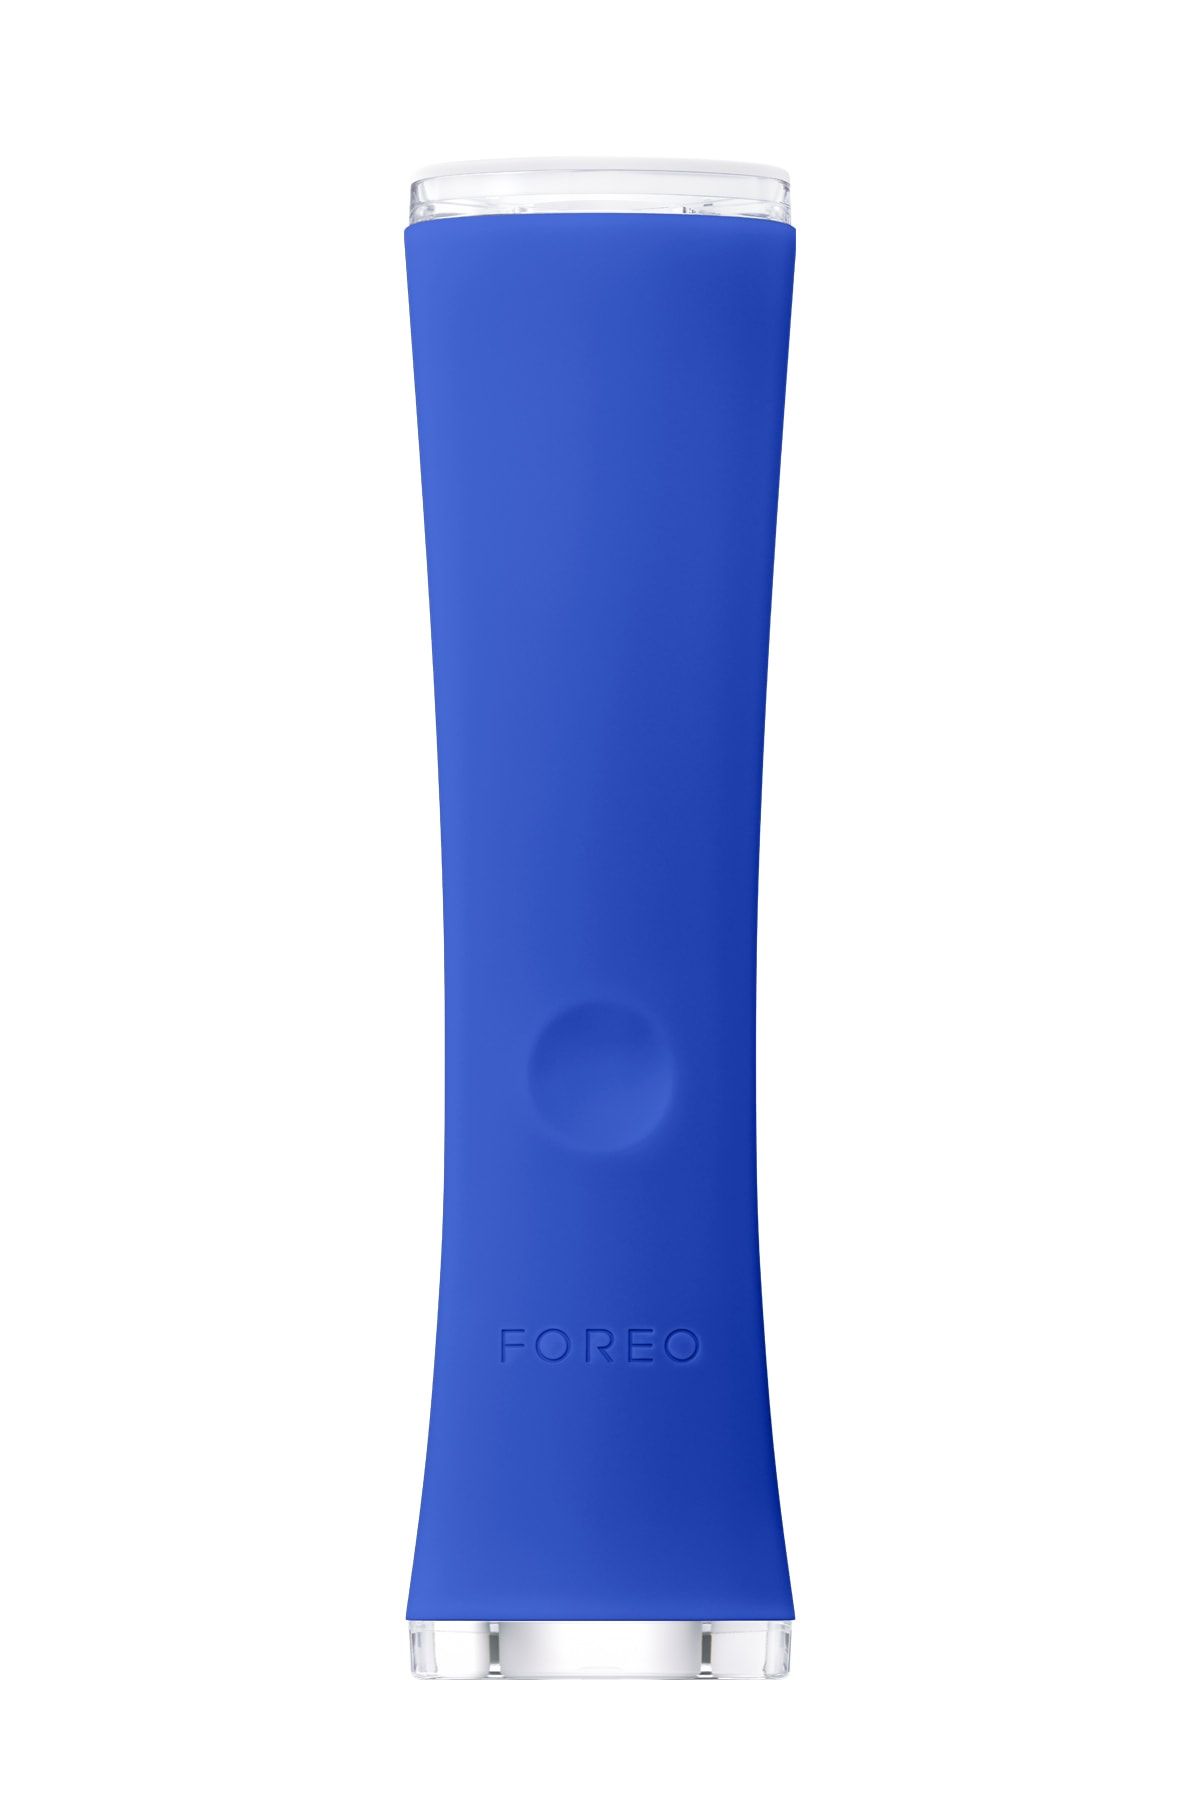 Foreo Espada™ Cobalt Blue akne karşıtı cilt bakım cihazı